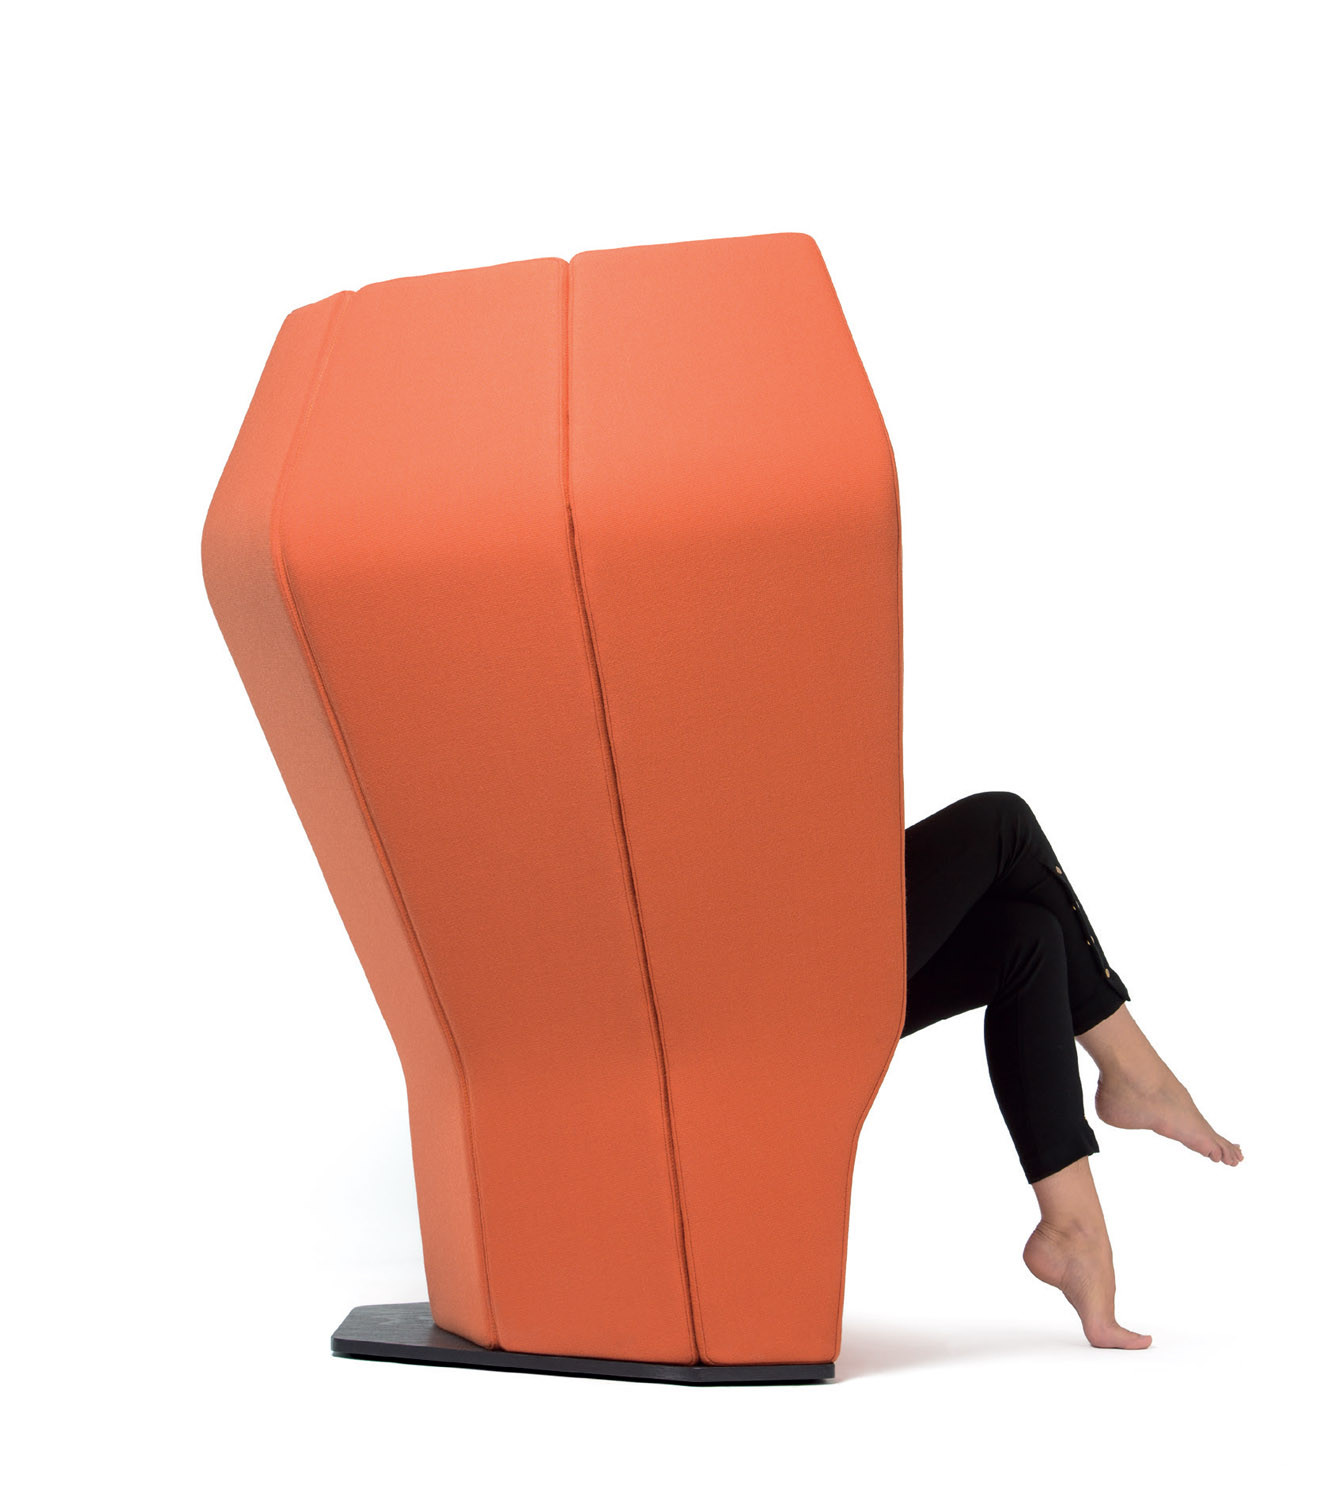 Beatnik Chair with Bose 2.1 Speakers